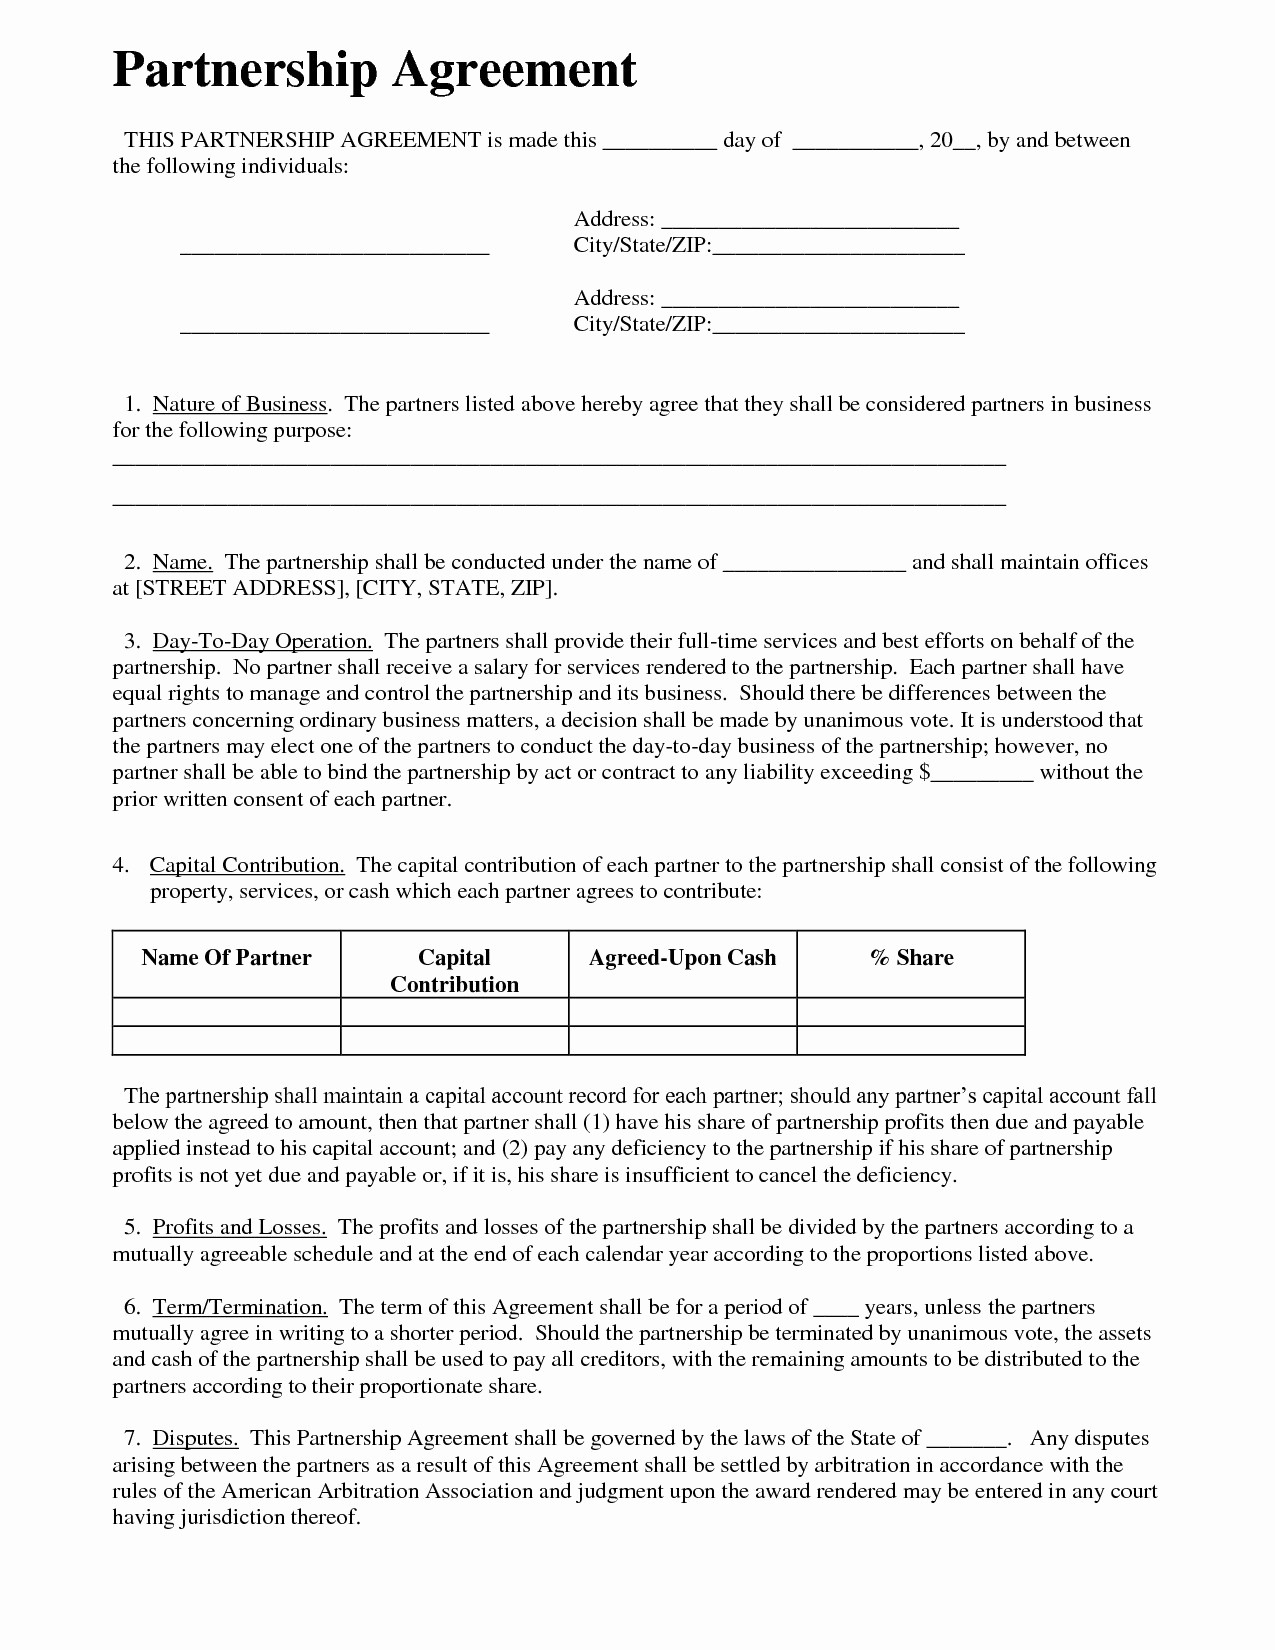 Partnership Agreement California Template Unique Document